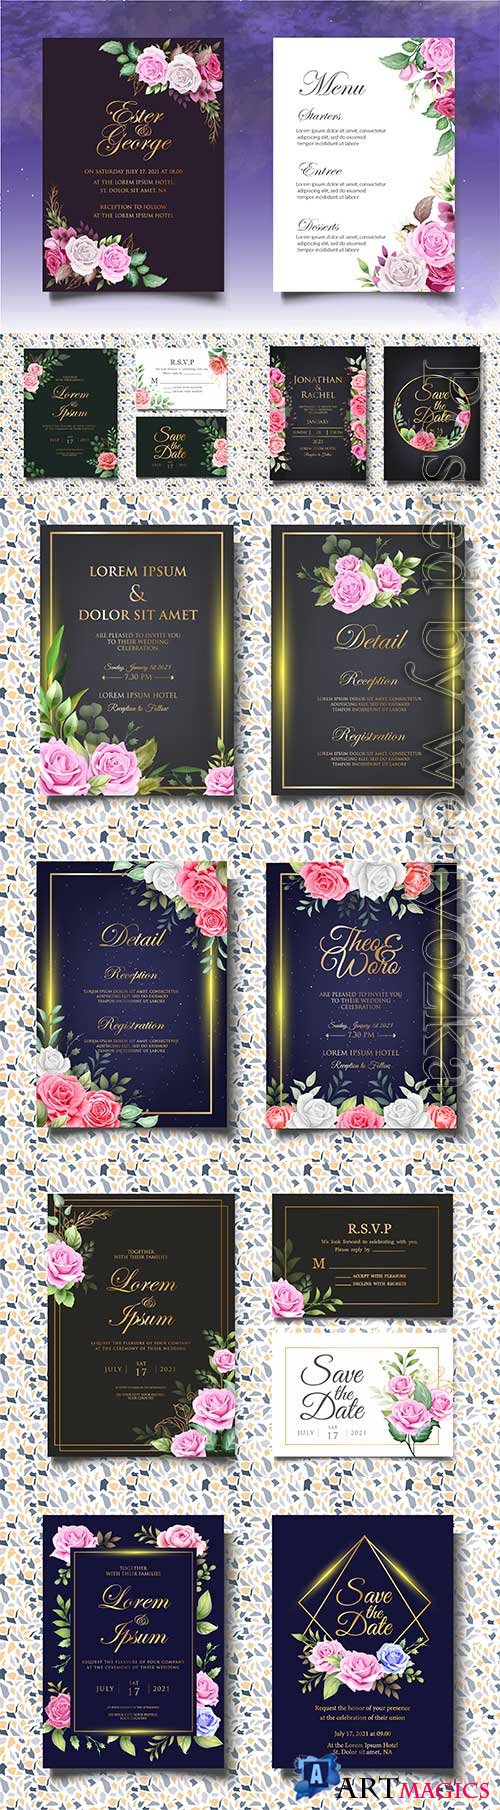 Beautiful invitation wedding card with decoration